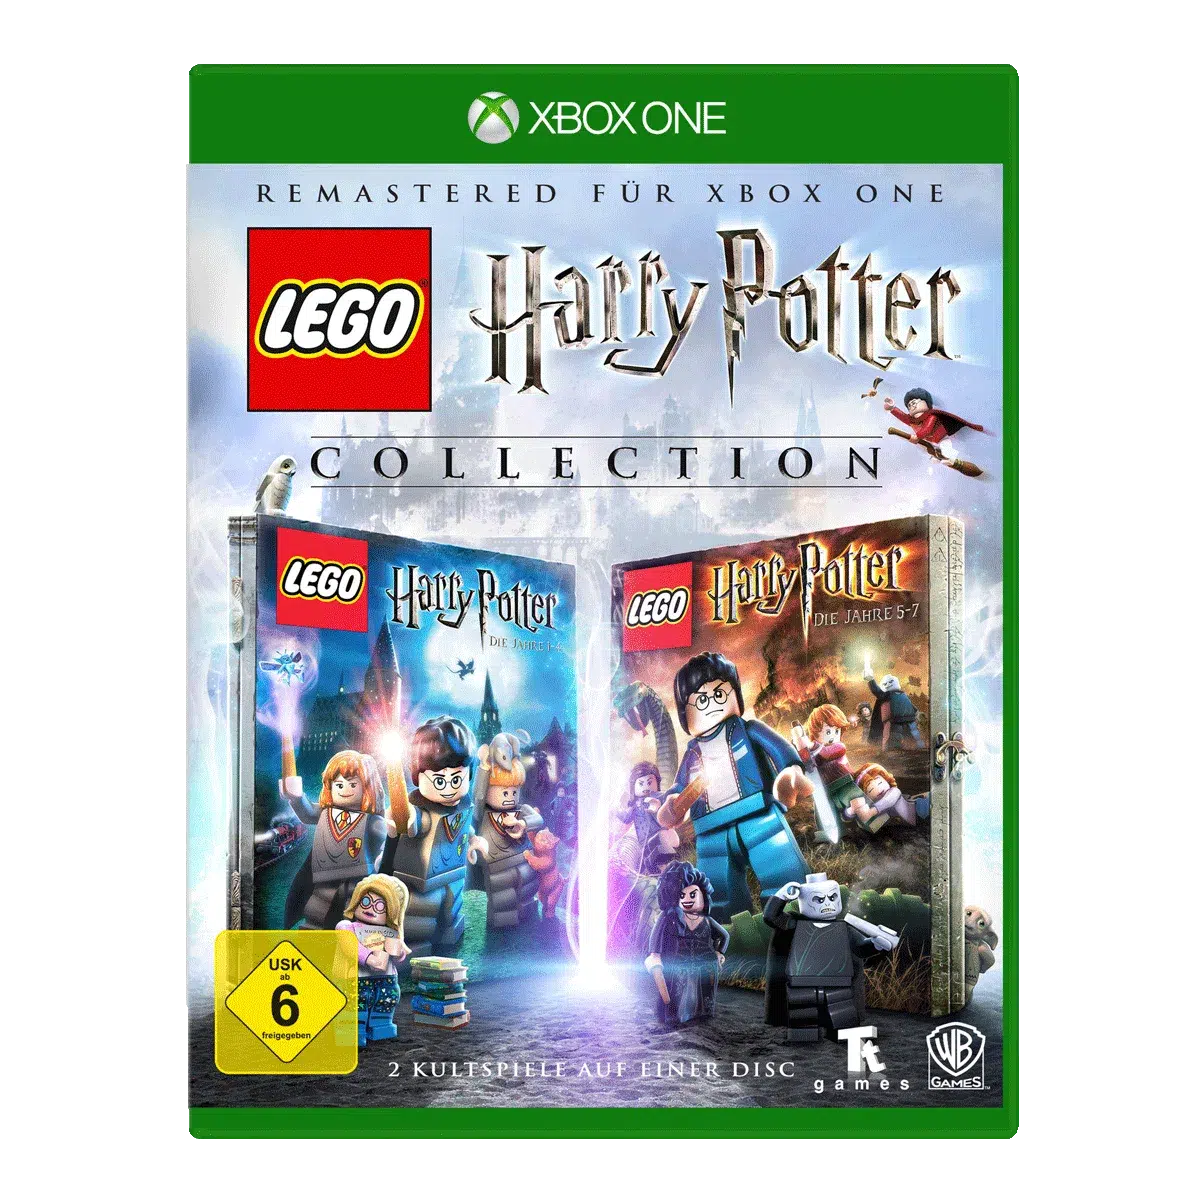 LEGO Harry Potter Collection (XONE)